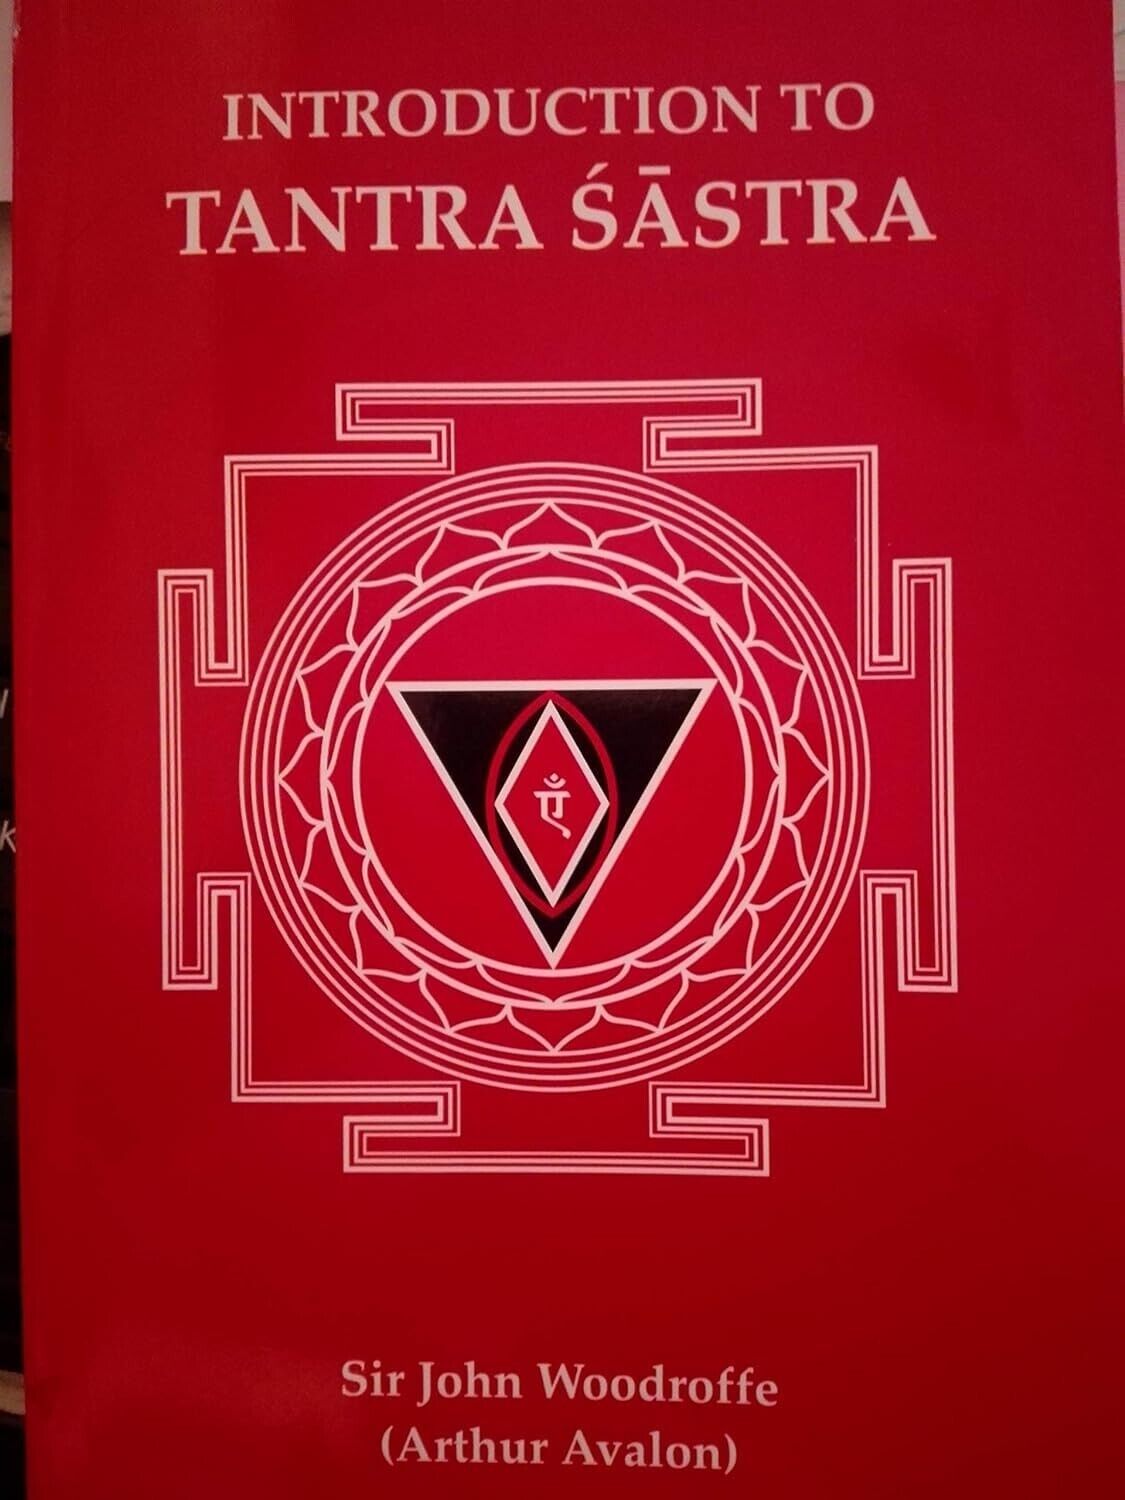 Shree Yantra Original & Book Introduction to Tantra Sastra by Sir John Woodroffe